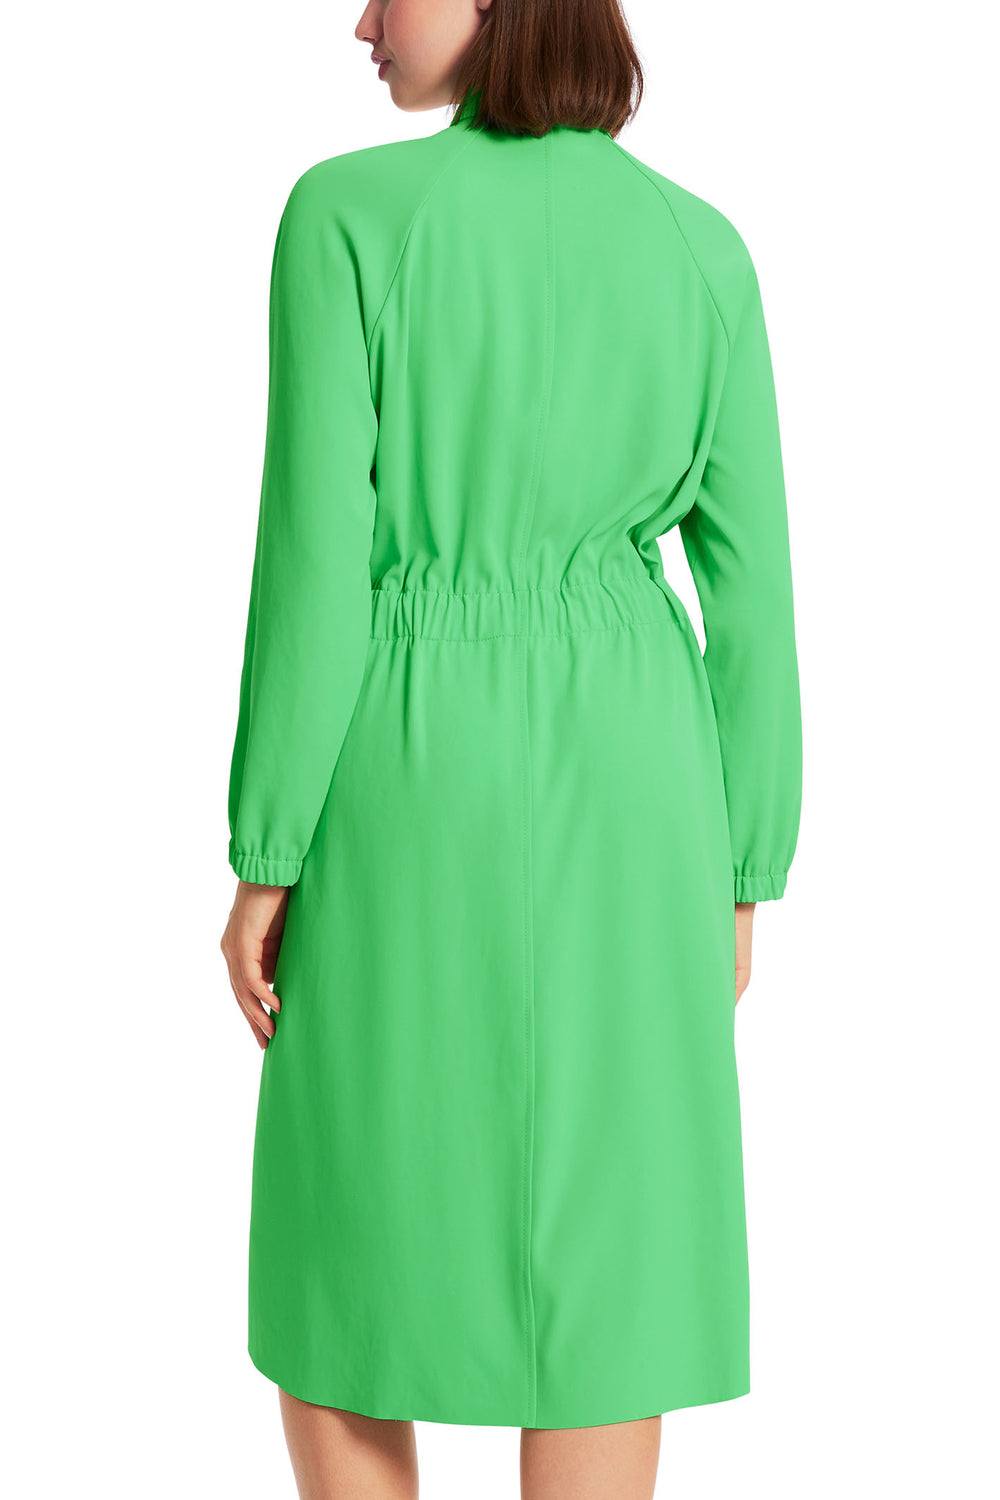 Marc Cain Sports WS 21.14 W28 543 New Neon Green Shirt Dress - Olivia Grace Fashion